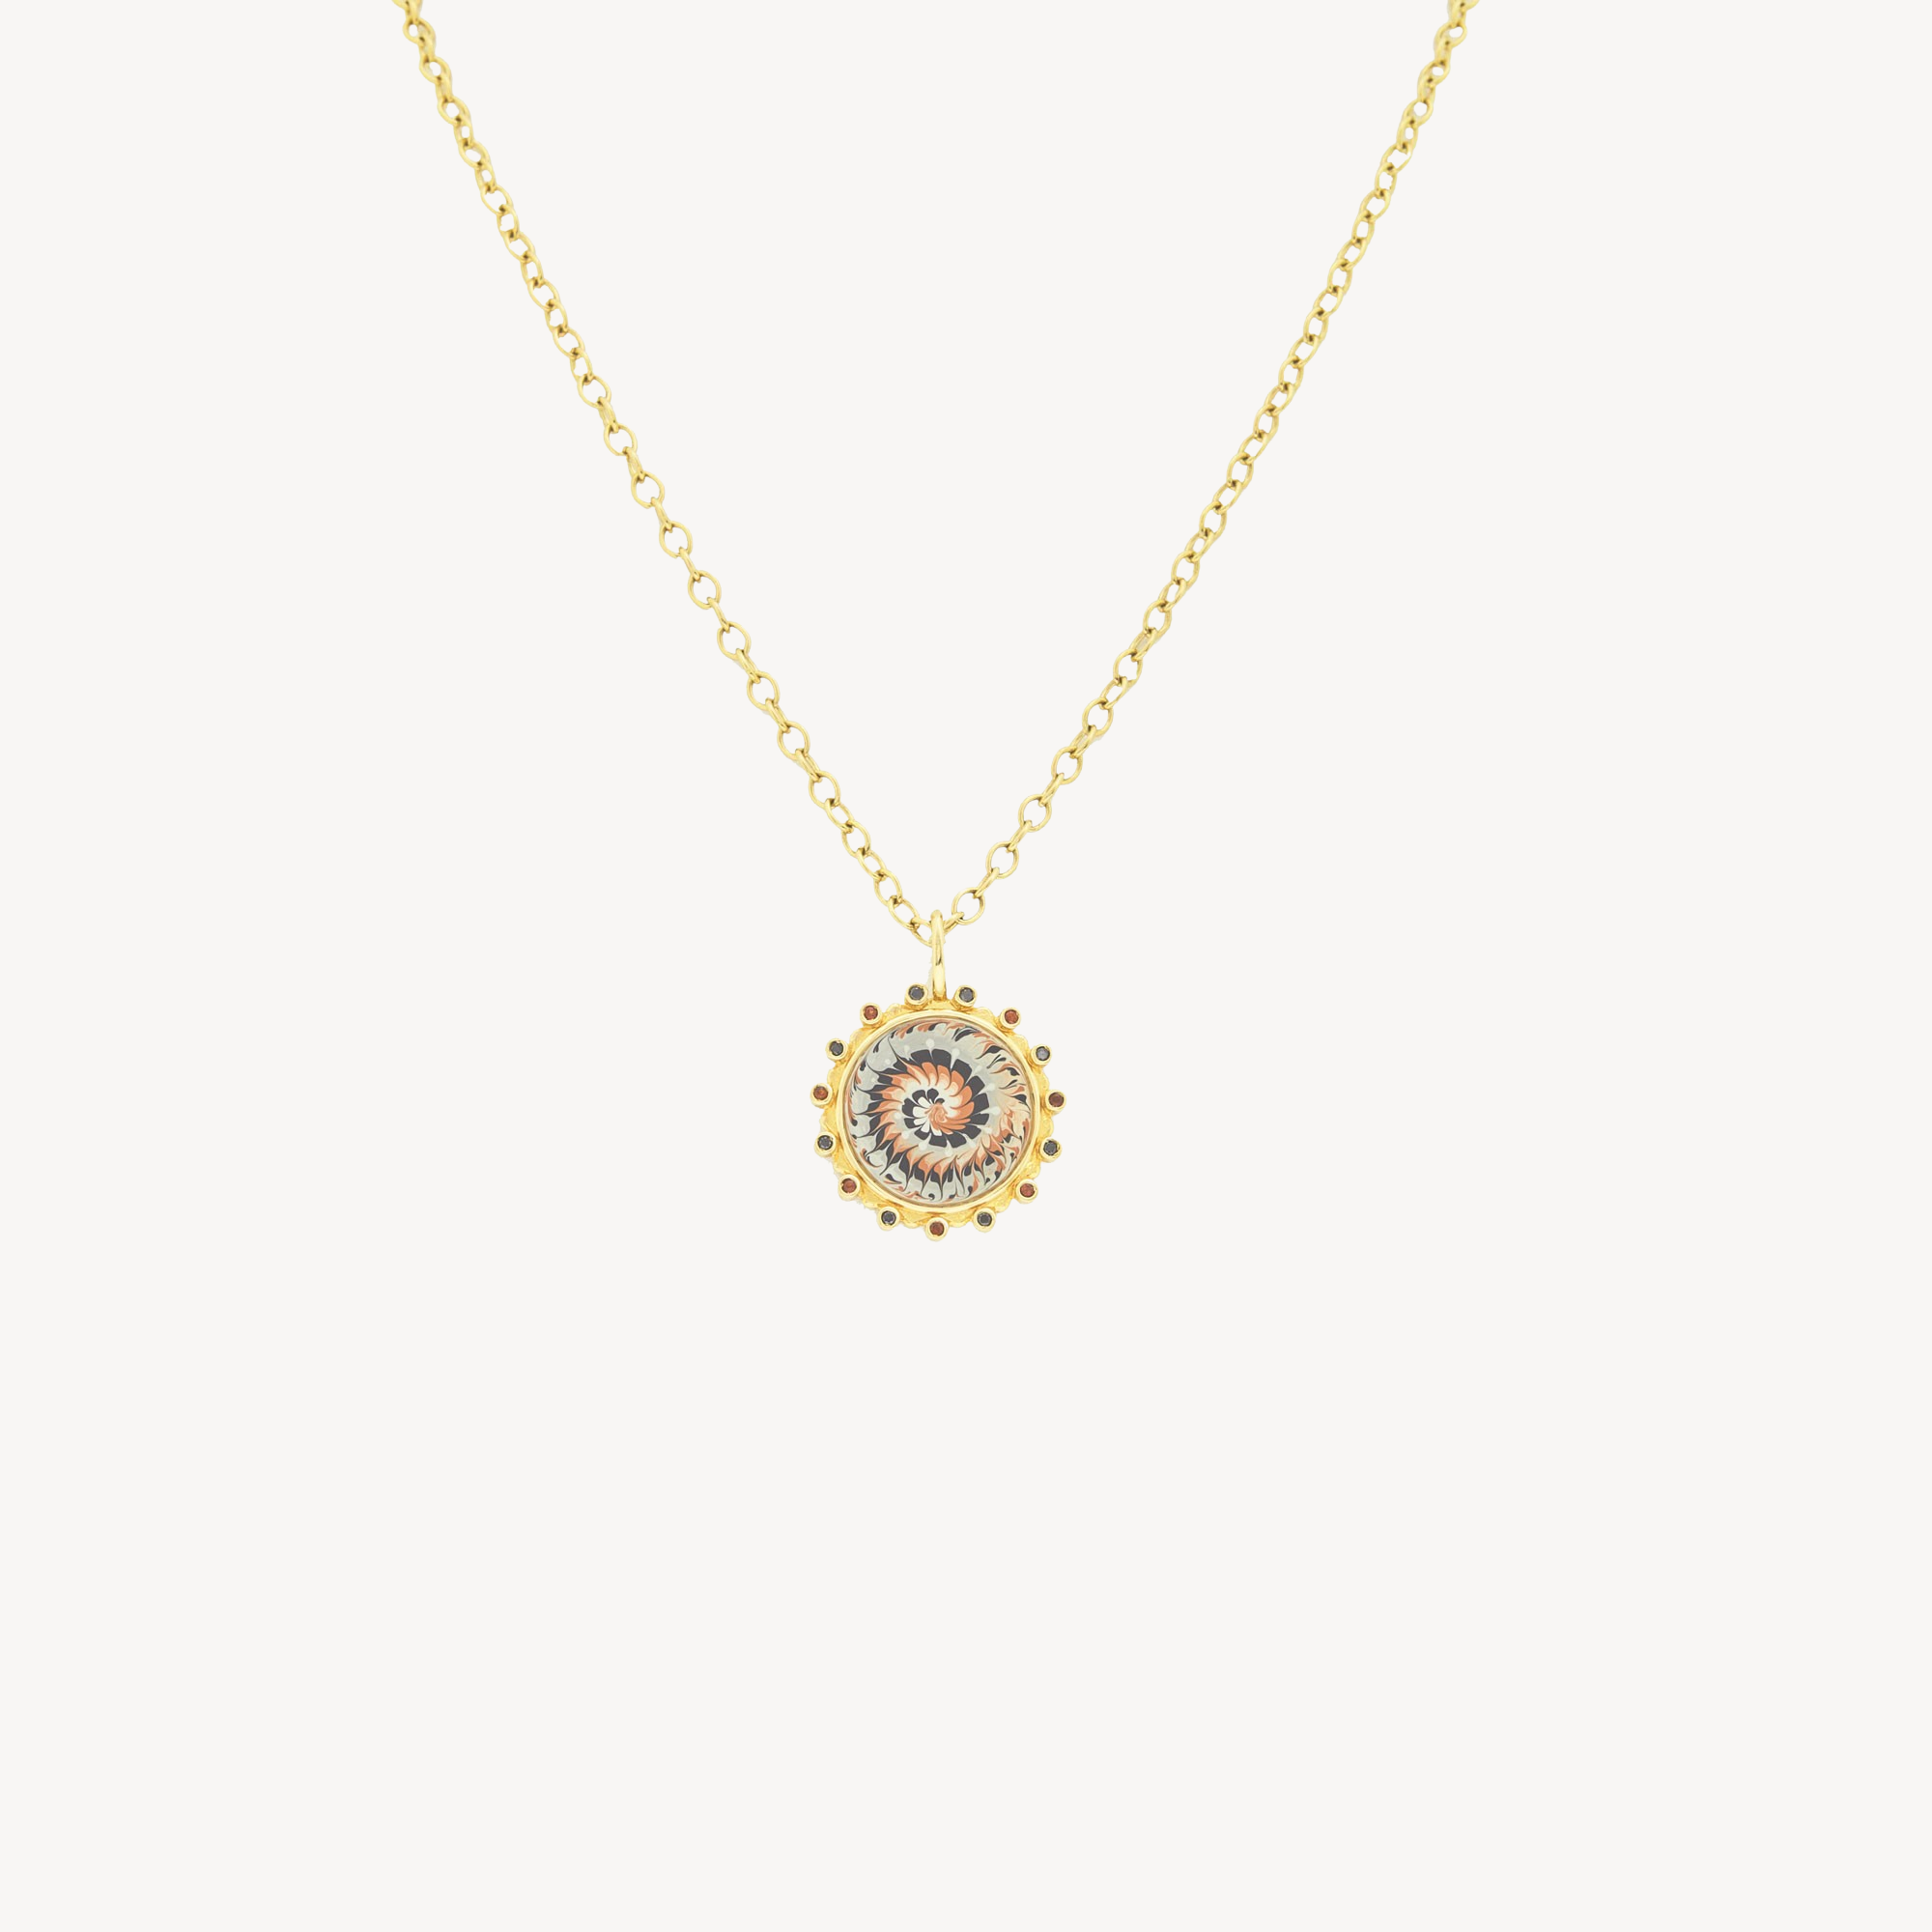 Garnet and Black Diamonds Large Spiral Necklace